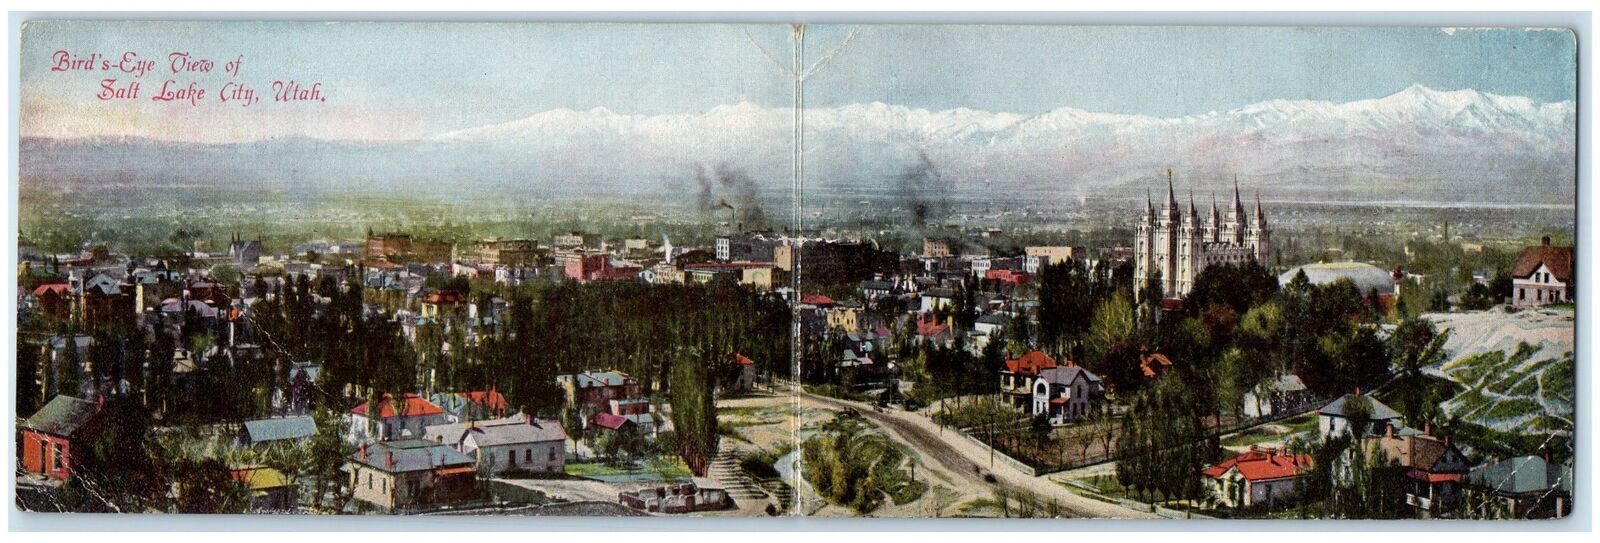 c1910's Birds Eye View Buildings Dirt Roads Tower Salt Lake City Utah Postcard